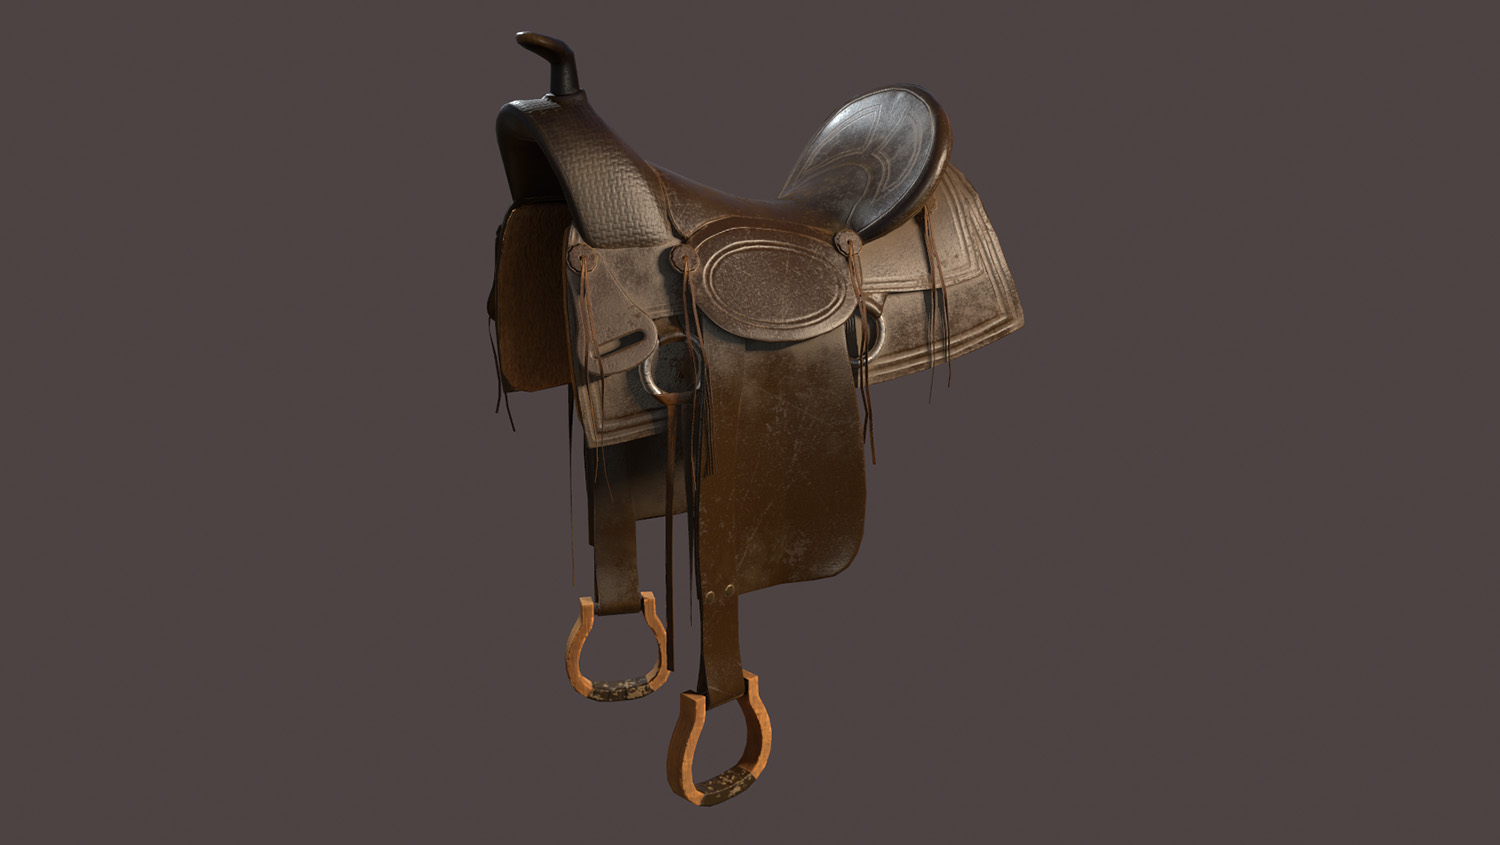 render of a saddle